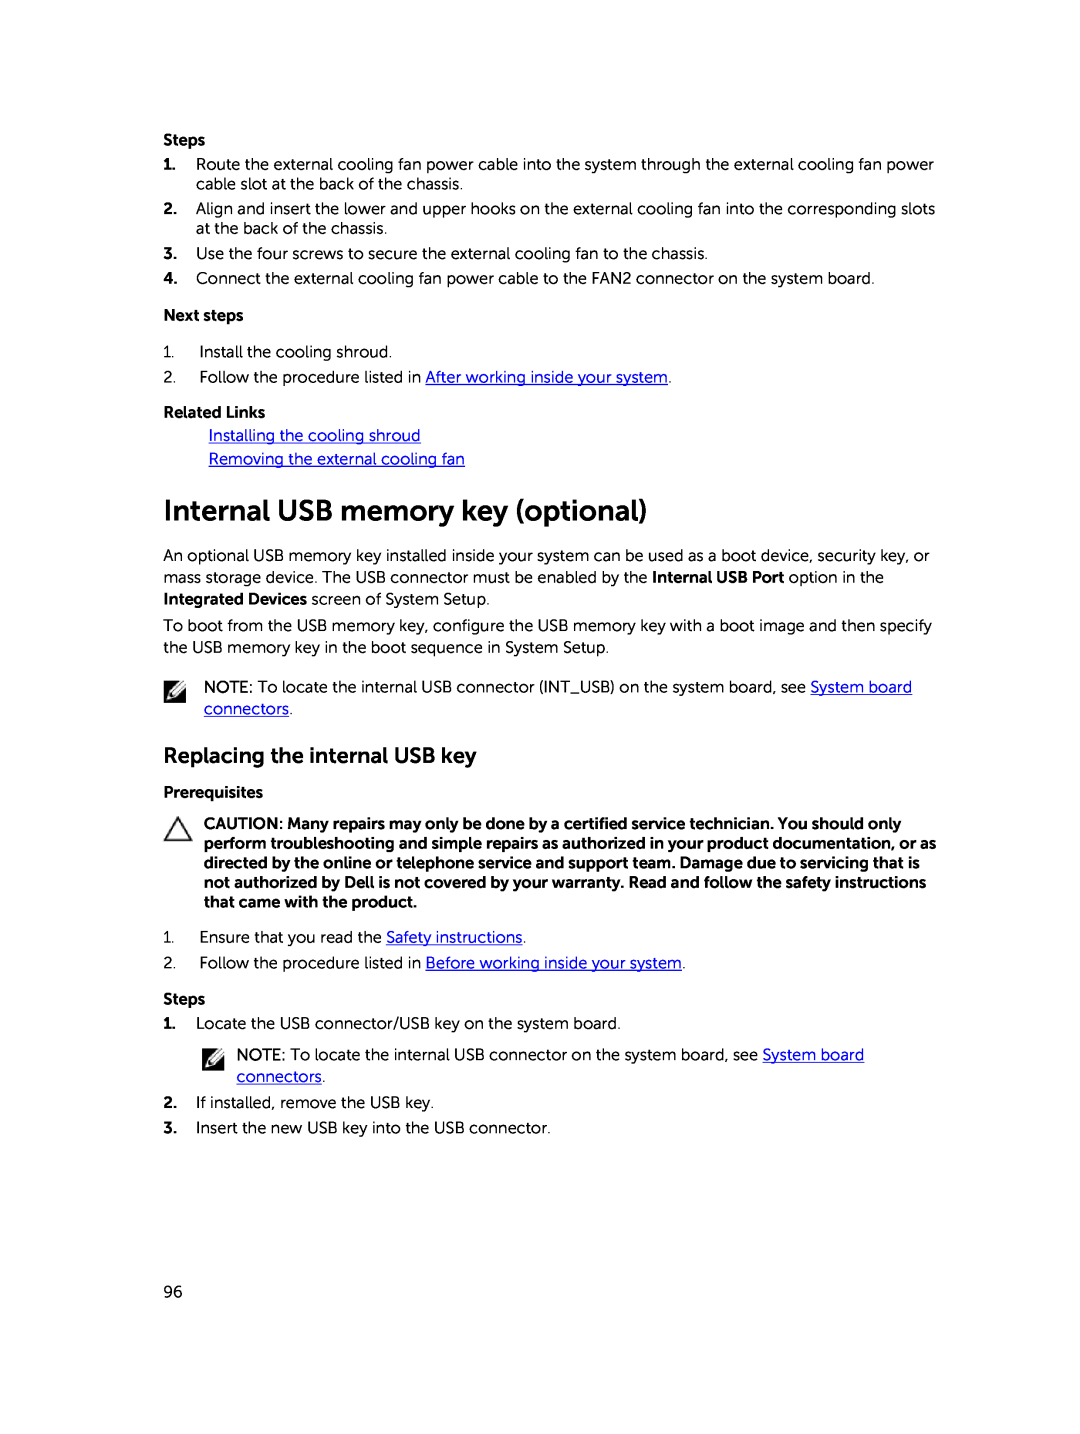 Dell E30S owner manual Internal USB memory key optional, Replacing the internal USB key, connectors 